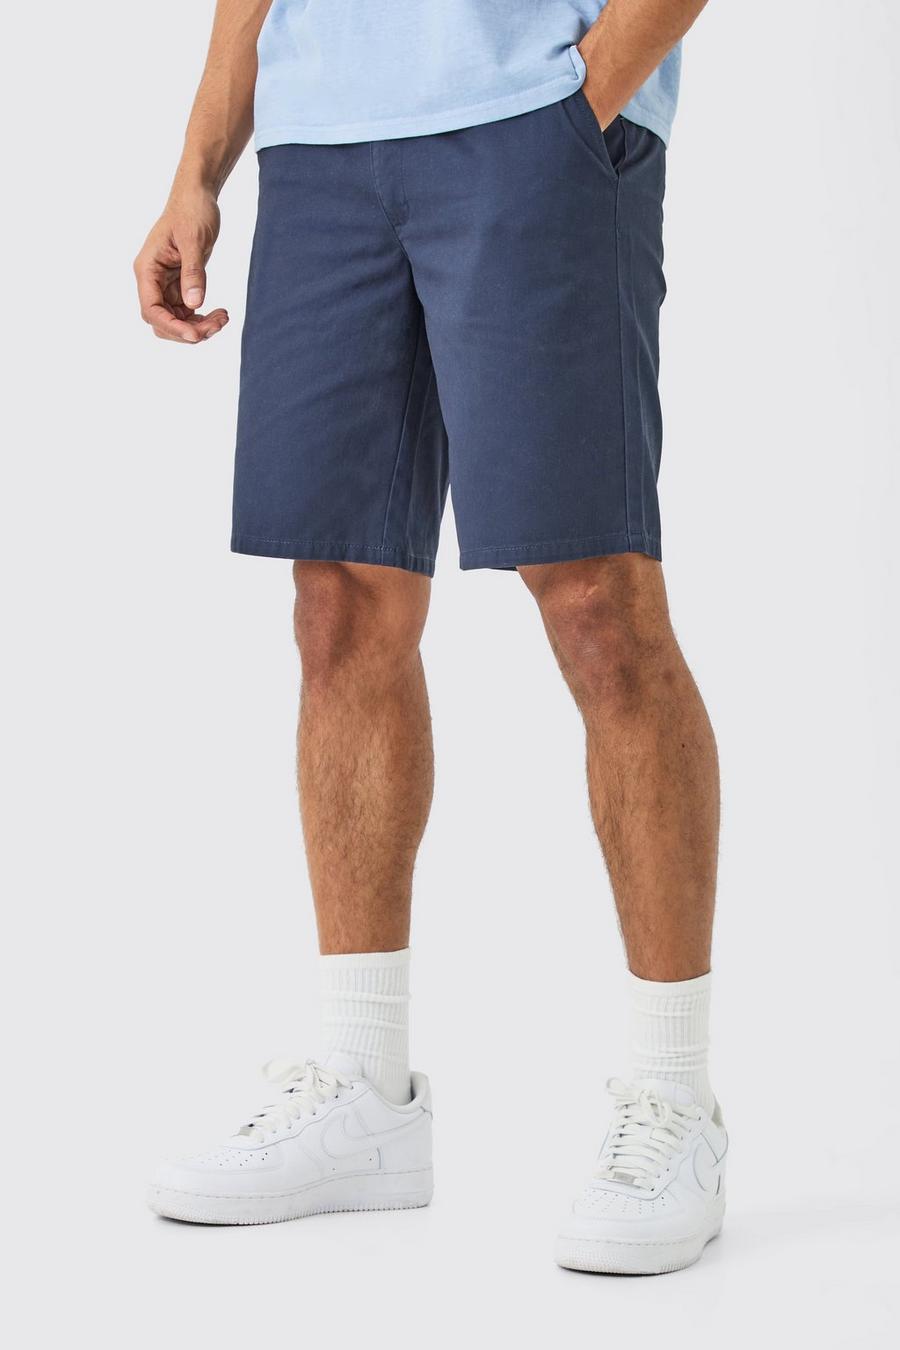 Lockere dunkelblaue Shorts, Navy